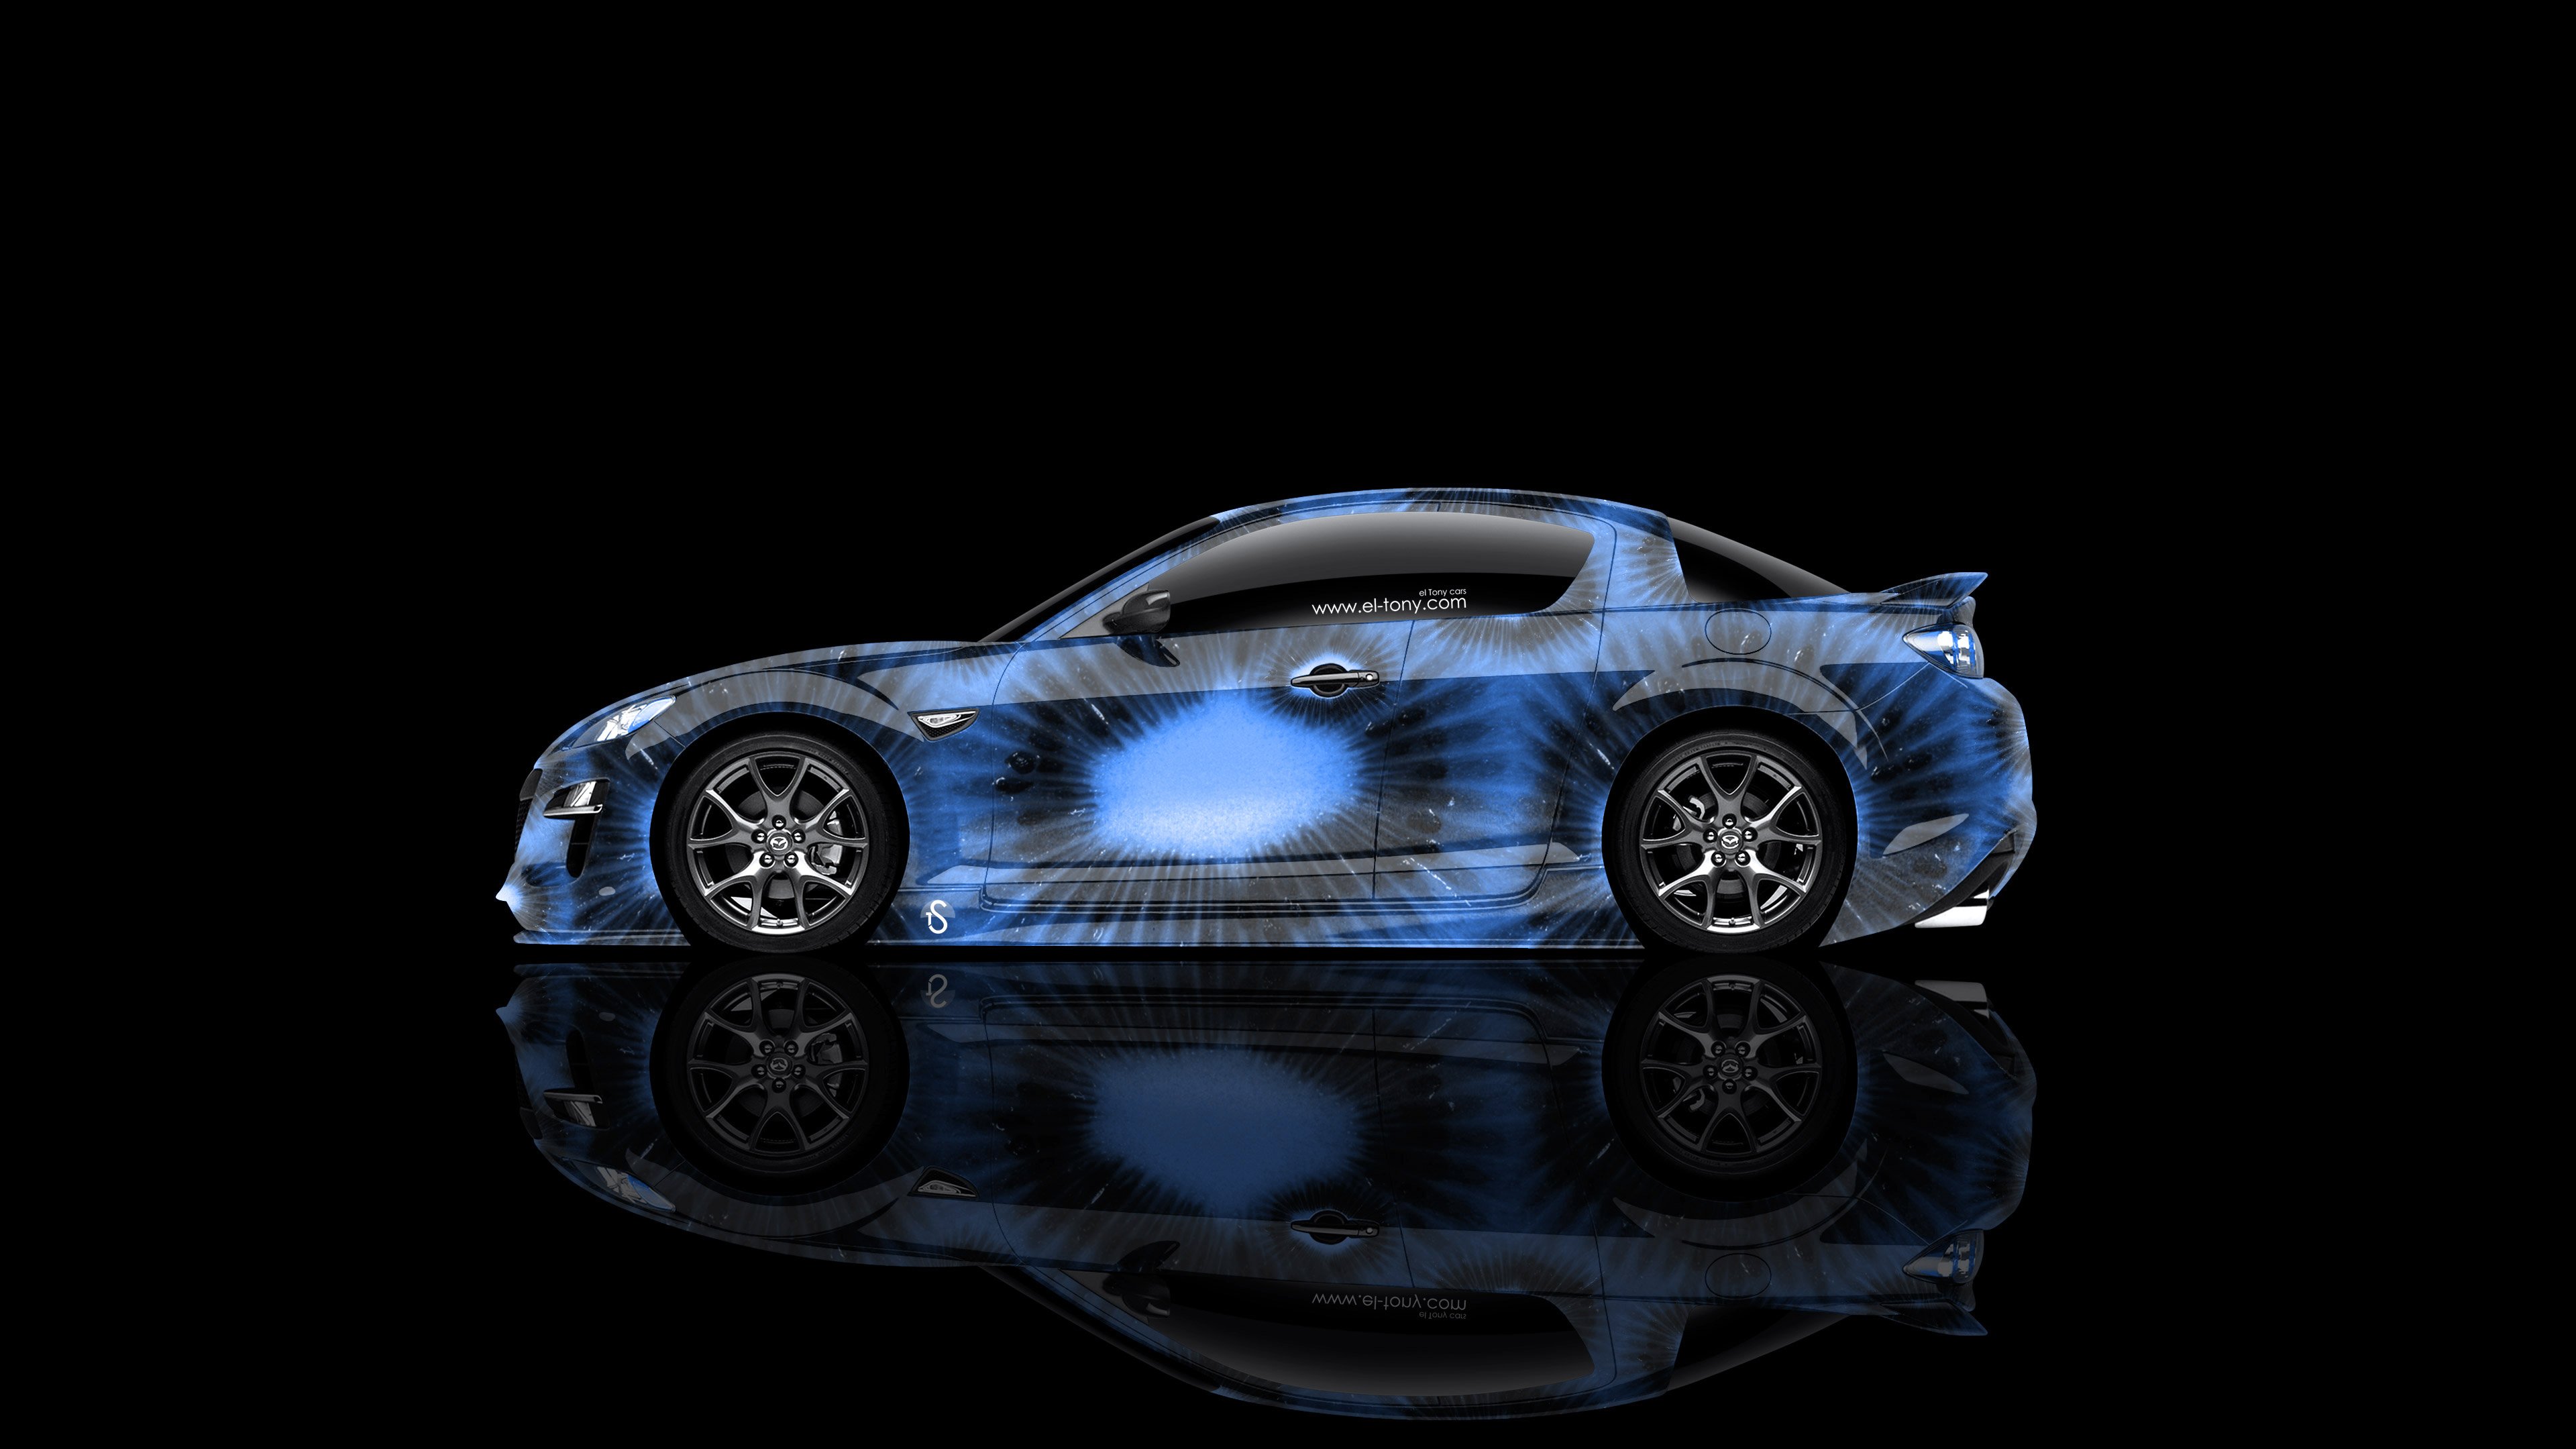 Mazda RX8 JDM Side Kiwi Aerography Car 2014 Blue Colors 4K Wallpapers